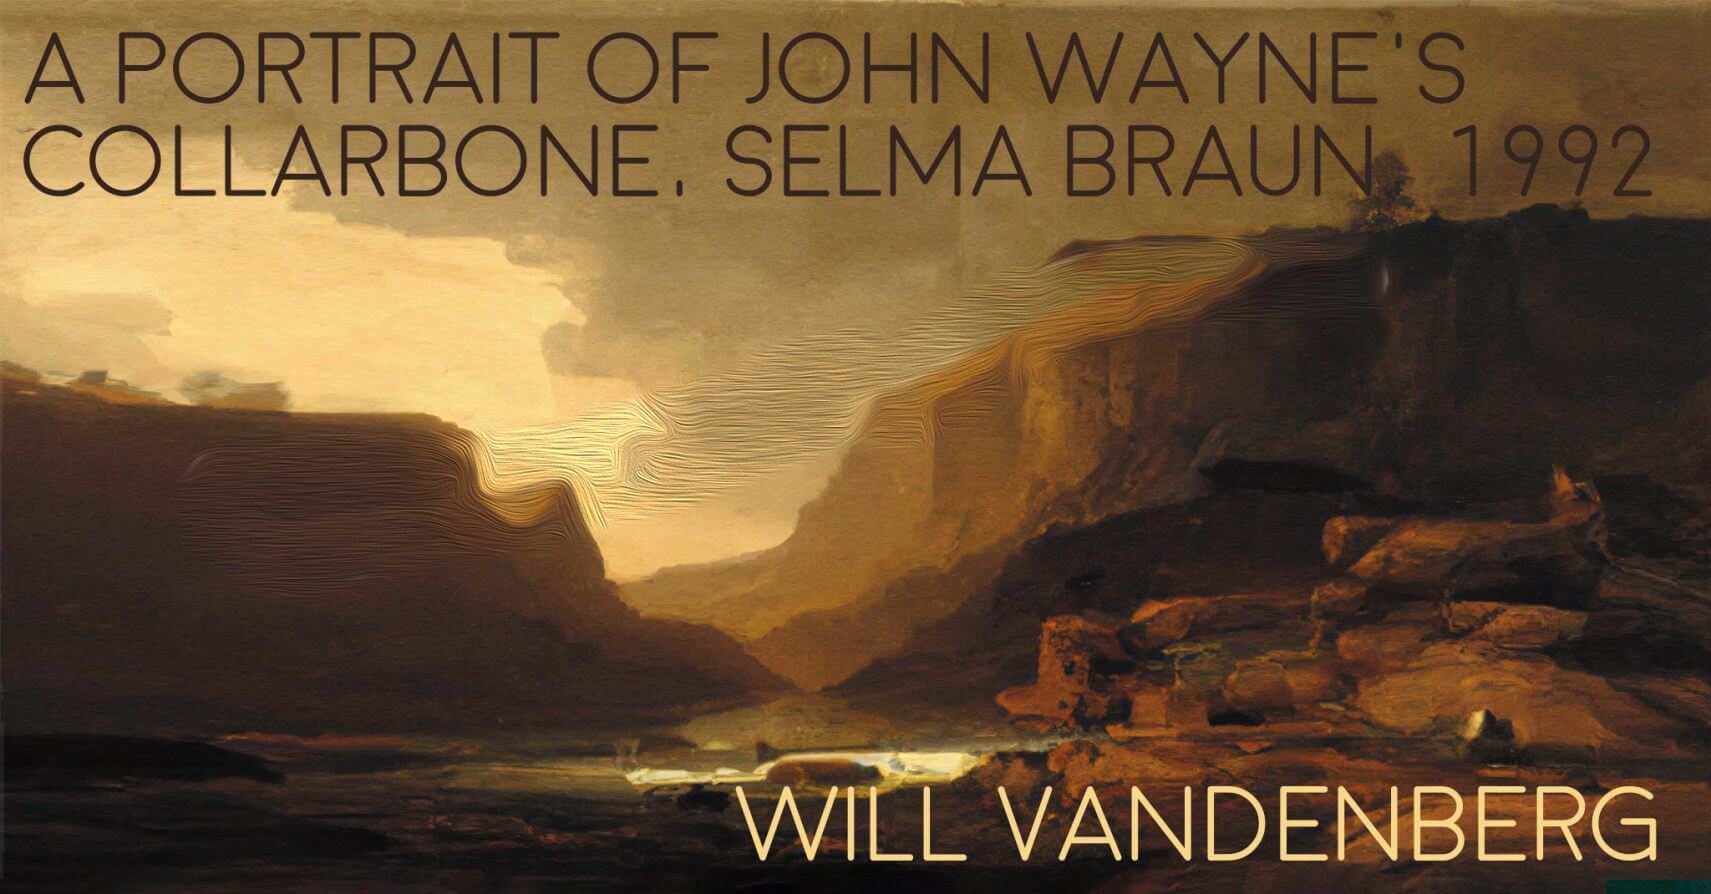 A PORTRAIT OF JOHN WAYNE’S COLLARBONE, SELMA BRAUN, 1992 by Will VanDenBerg